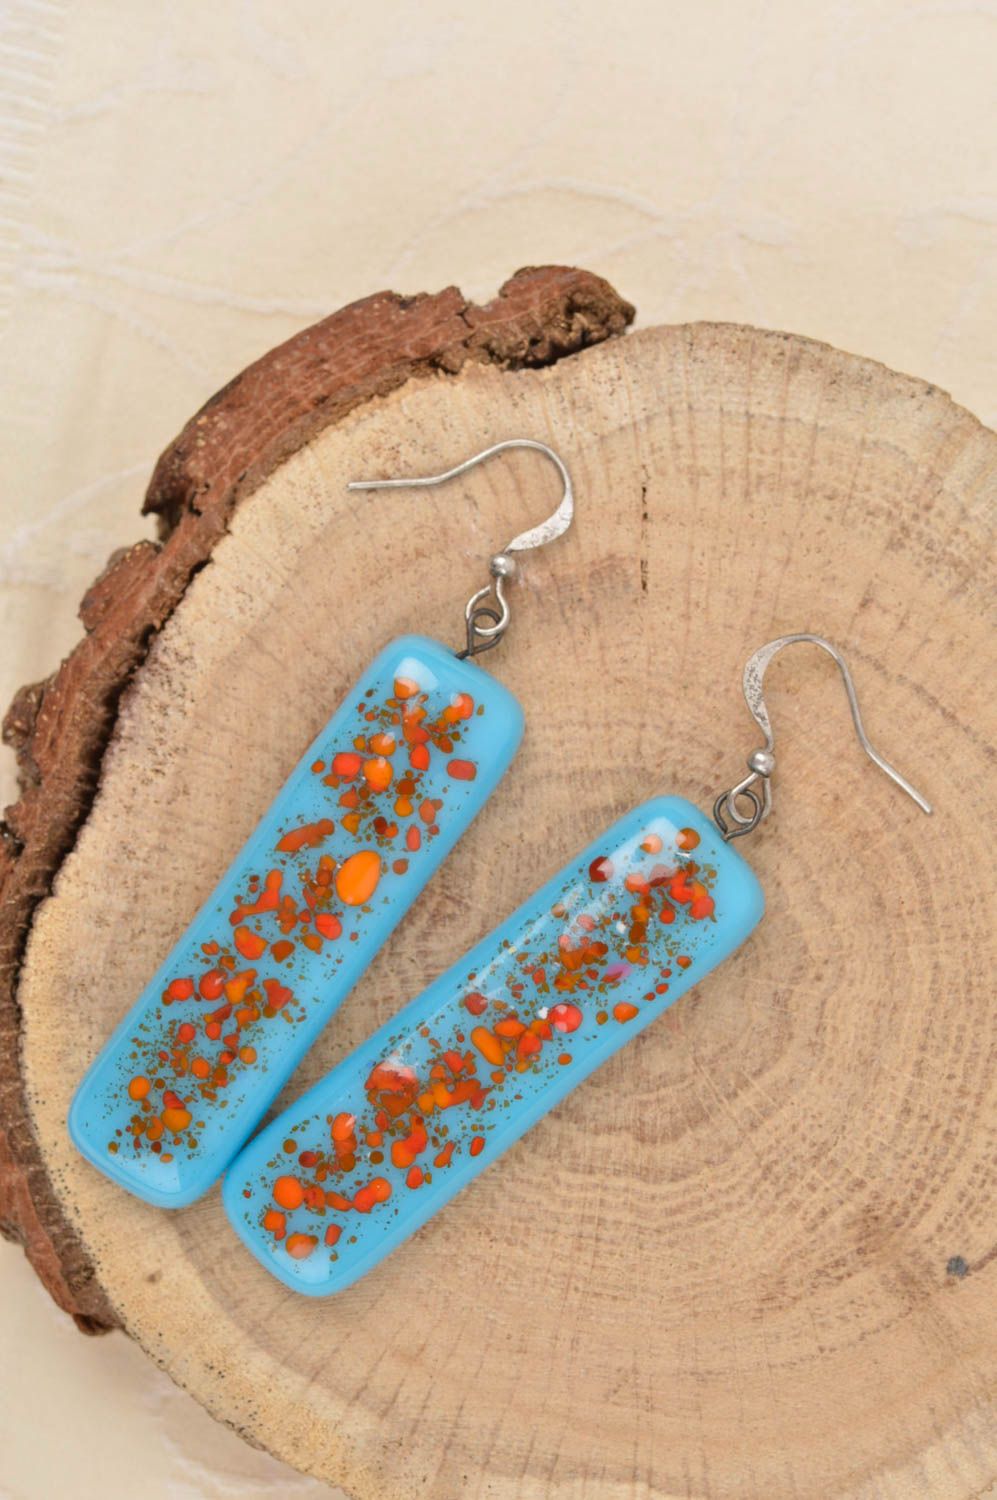 Stylish handmade glass earrings artisan jewelry designs accessories for girls photo 1